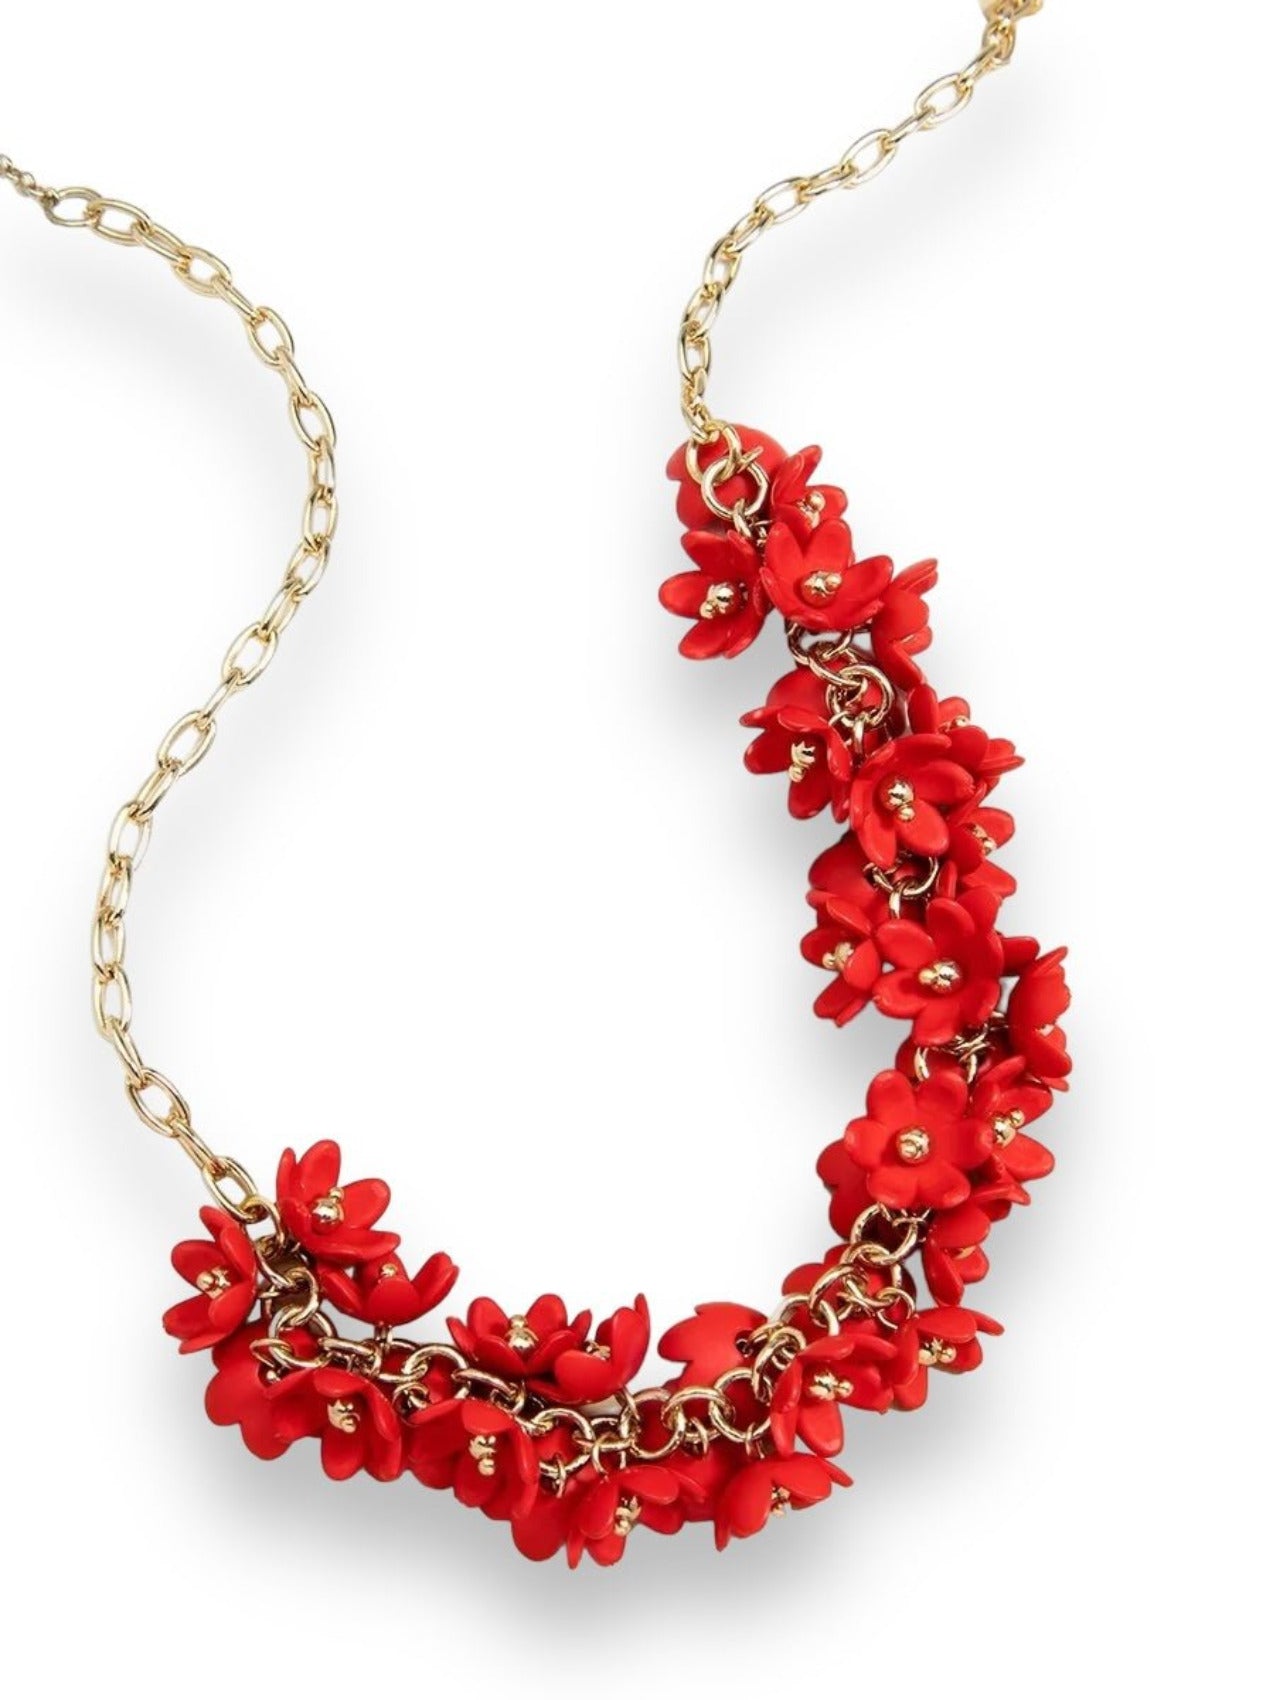 petite-petals-collar-necklace-accessories-jewelry-necklaces-georgia-kate